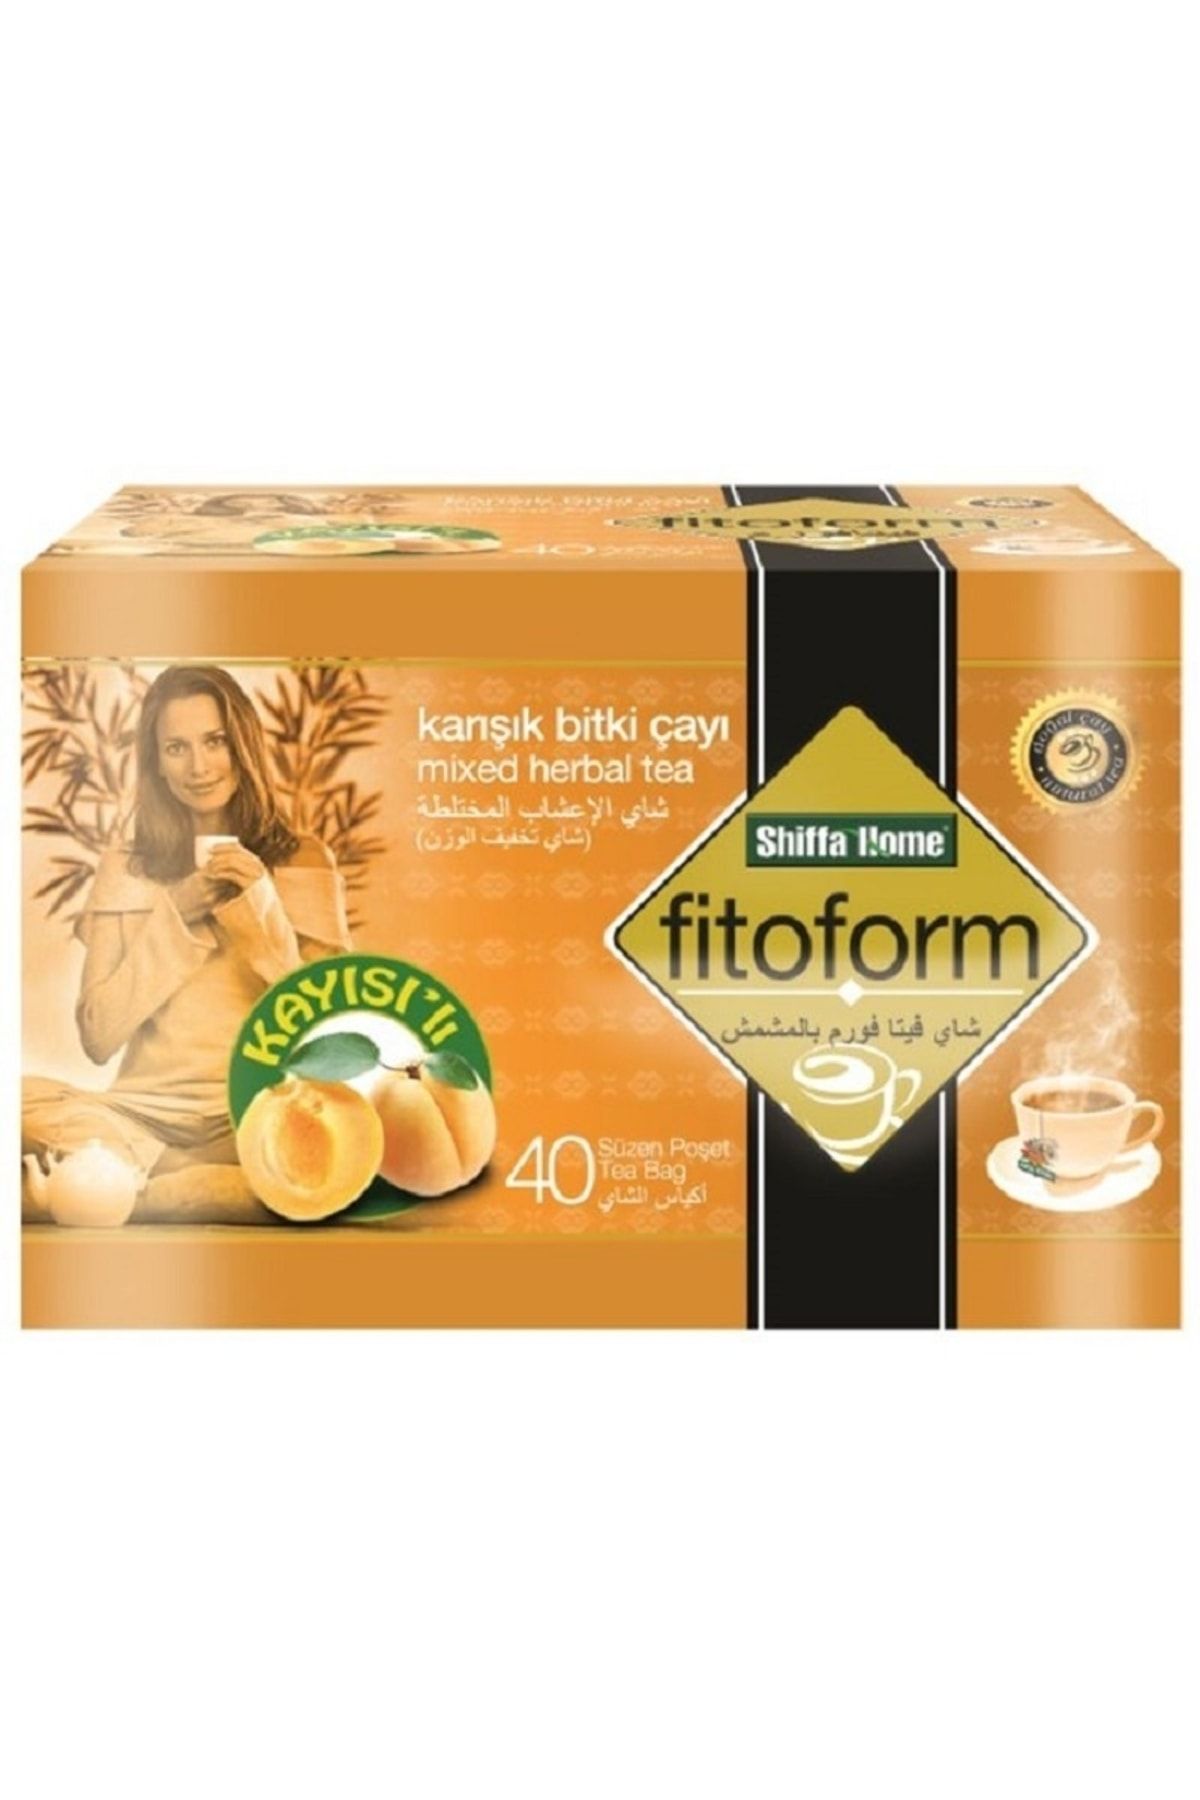 Shiffa Home 2 Kutu Fitoform Karışık Bitki Çayı Kayısılı Fitoform L-karnitinli